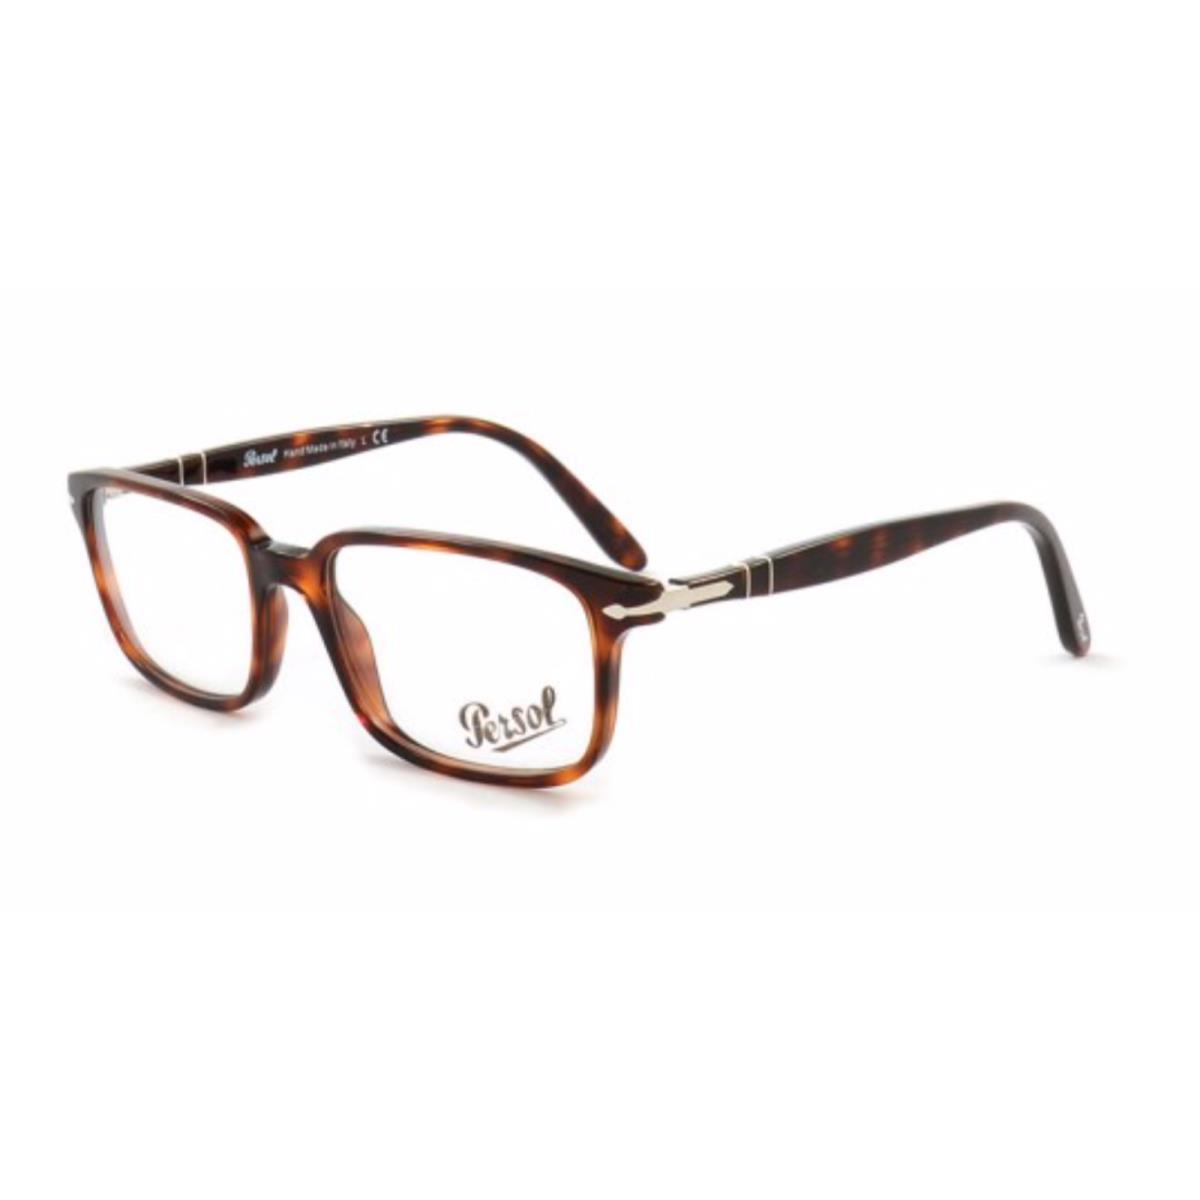 Classic Persol Rx-able Eyeglasses 3013-V 24 53-17 140 Tortoise Silver Frames